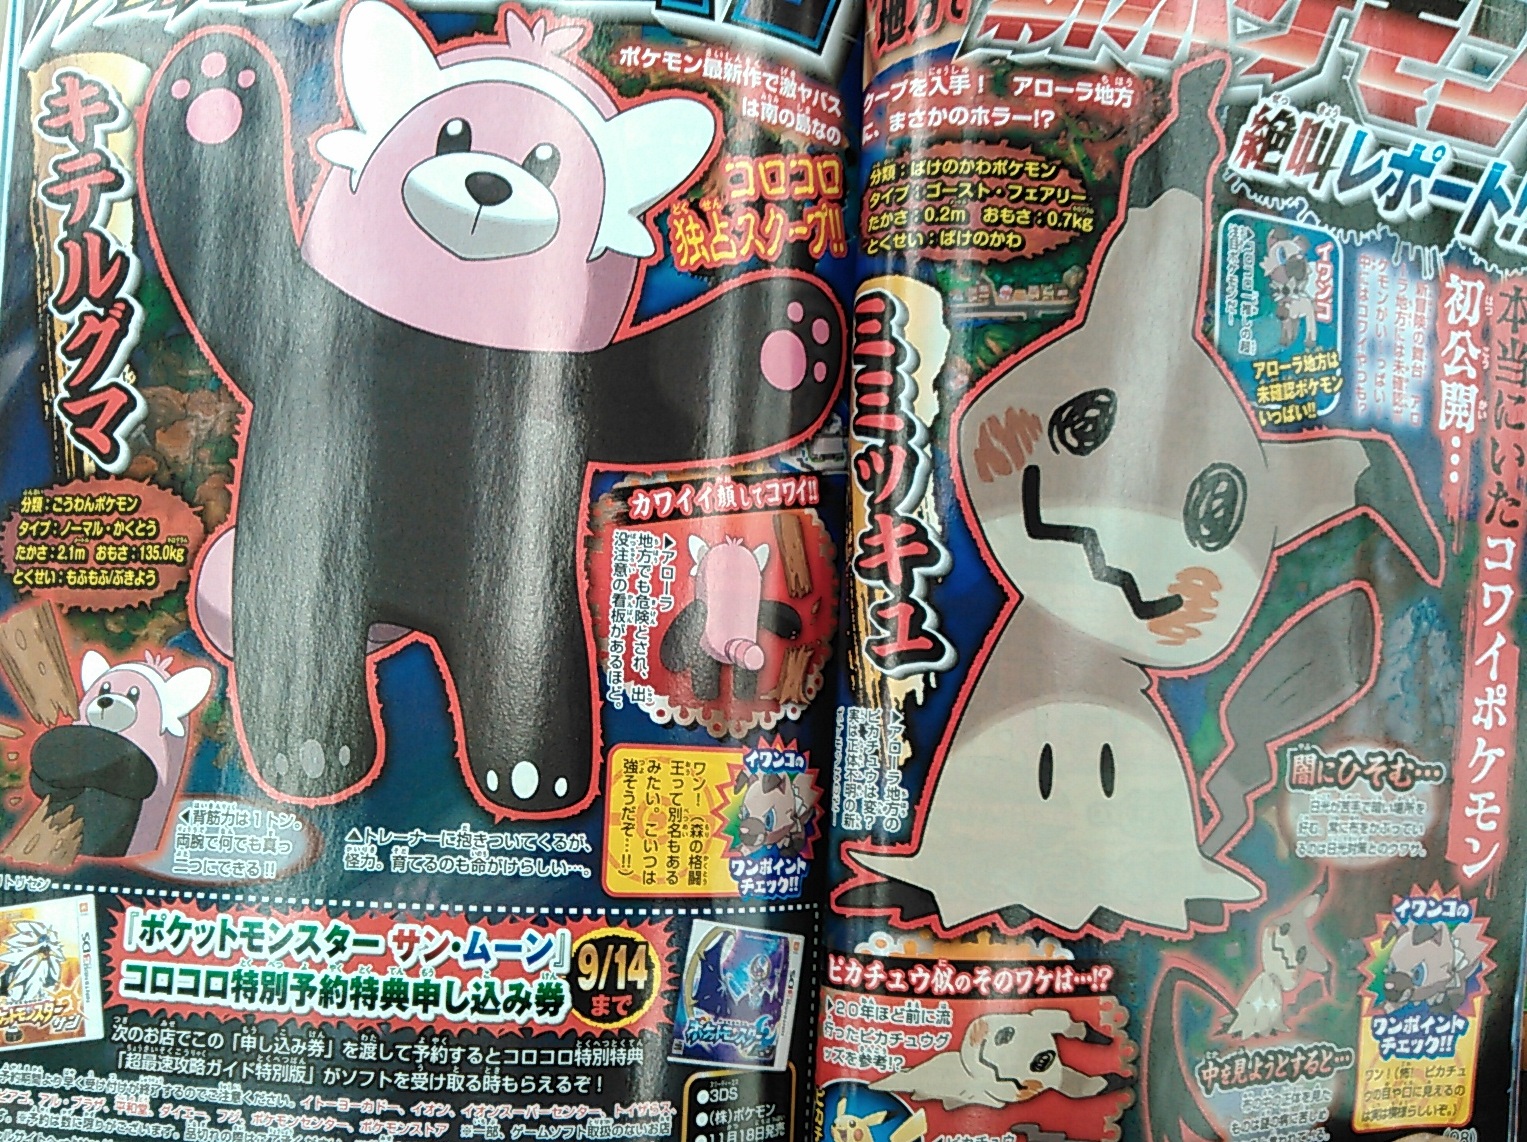 Phione Pokemon card game Japan Anime Very Rare Pocket monster